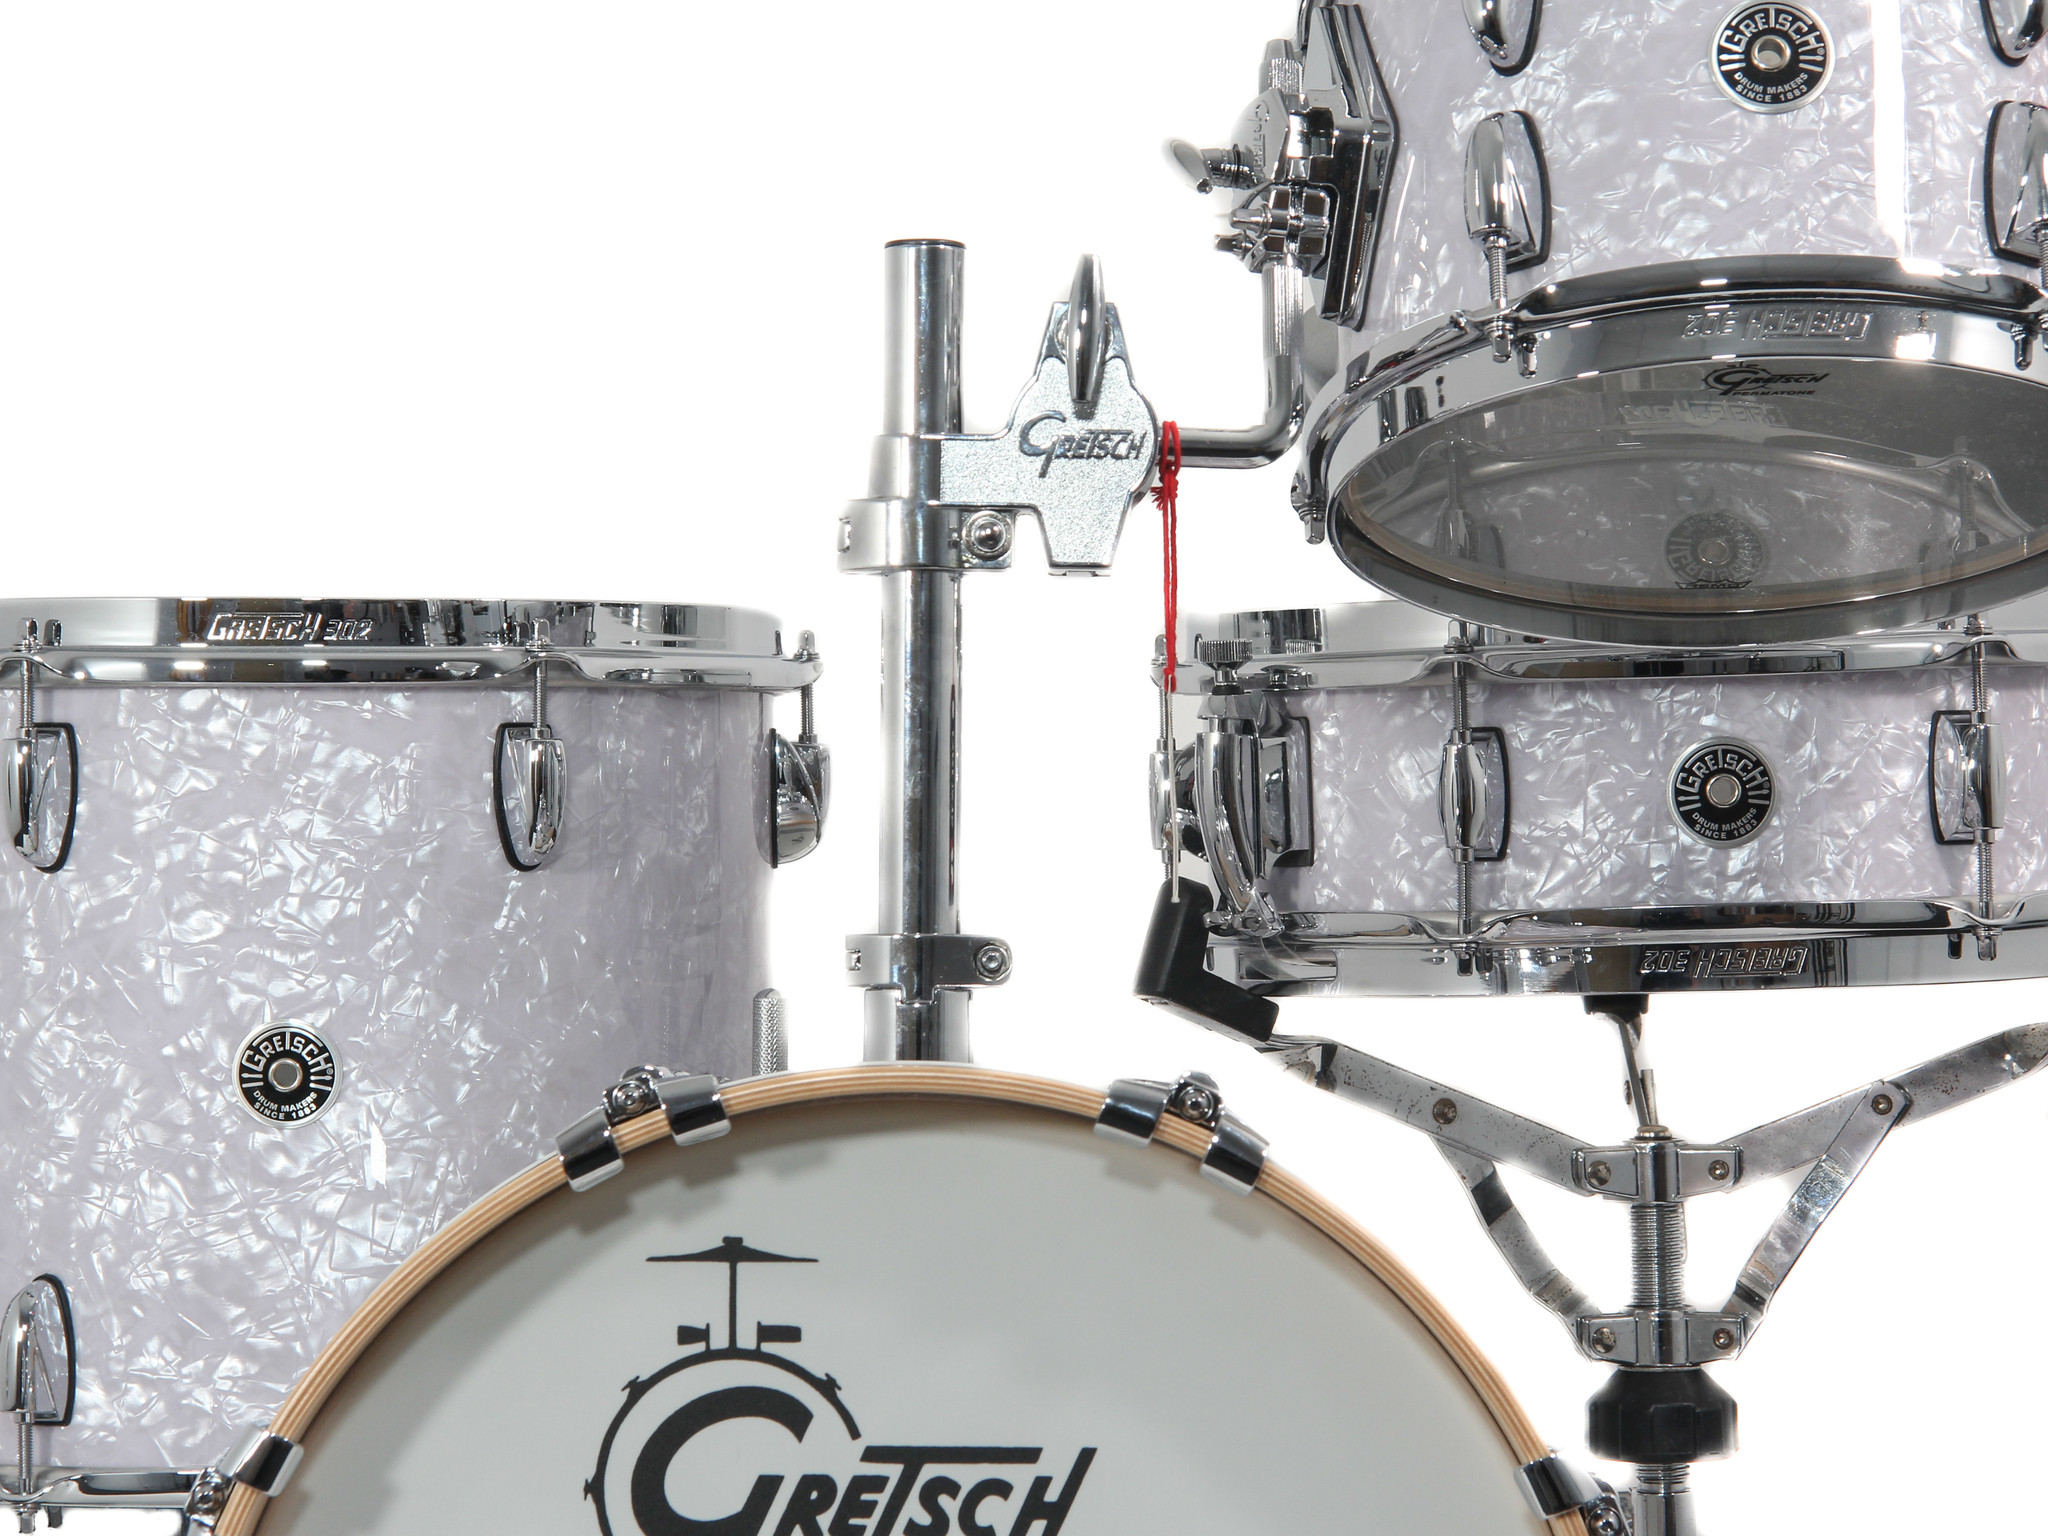 Gretsch Drums Brooklyn Micro Kit Demo 